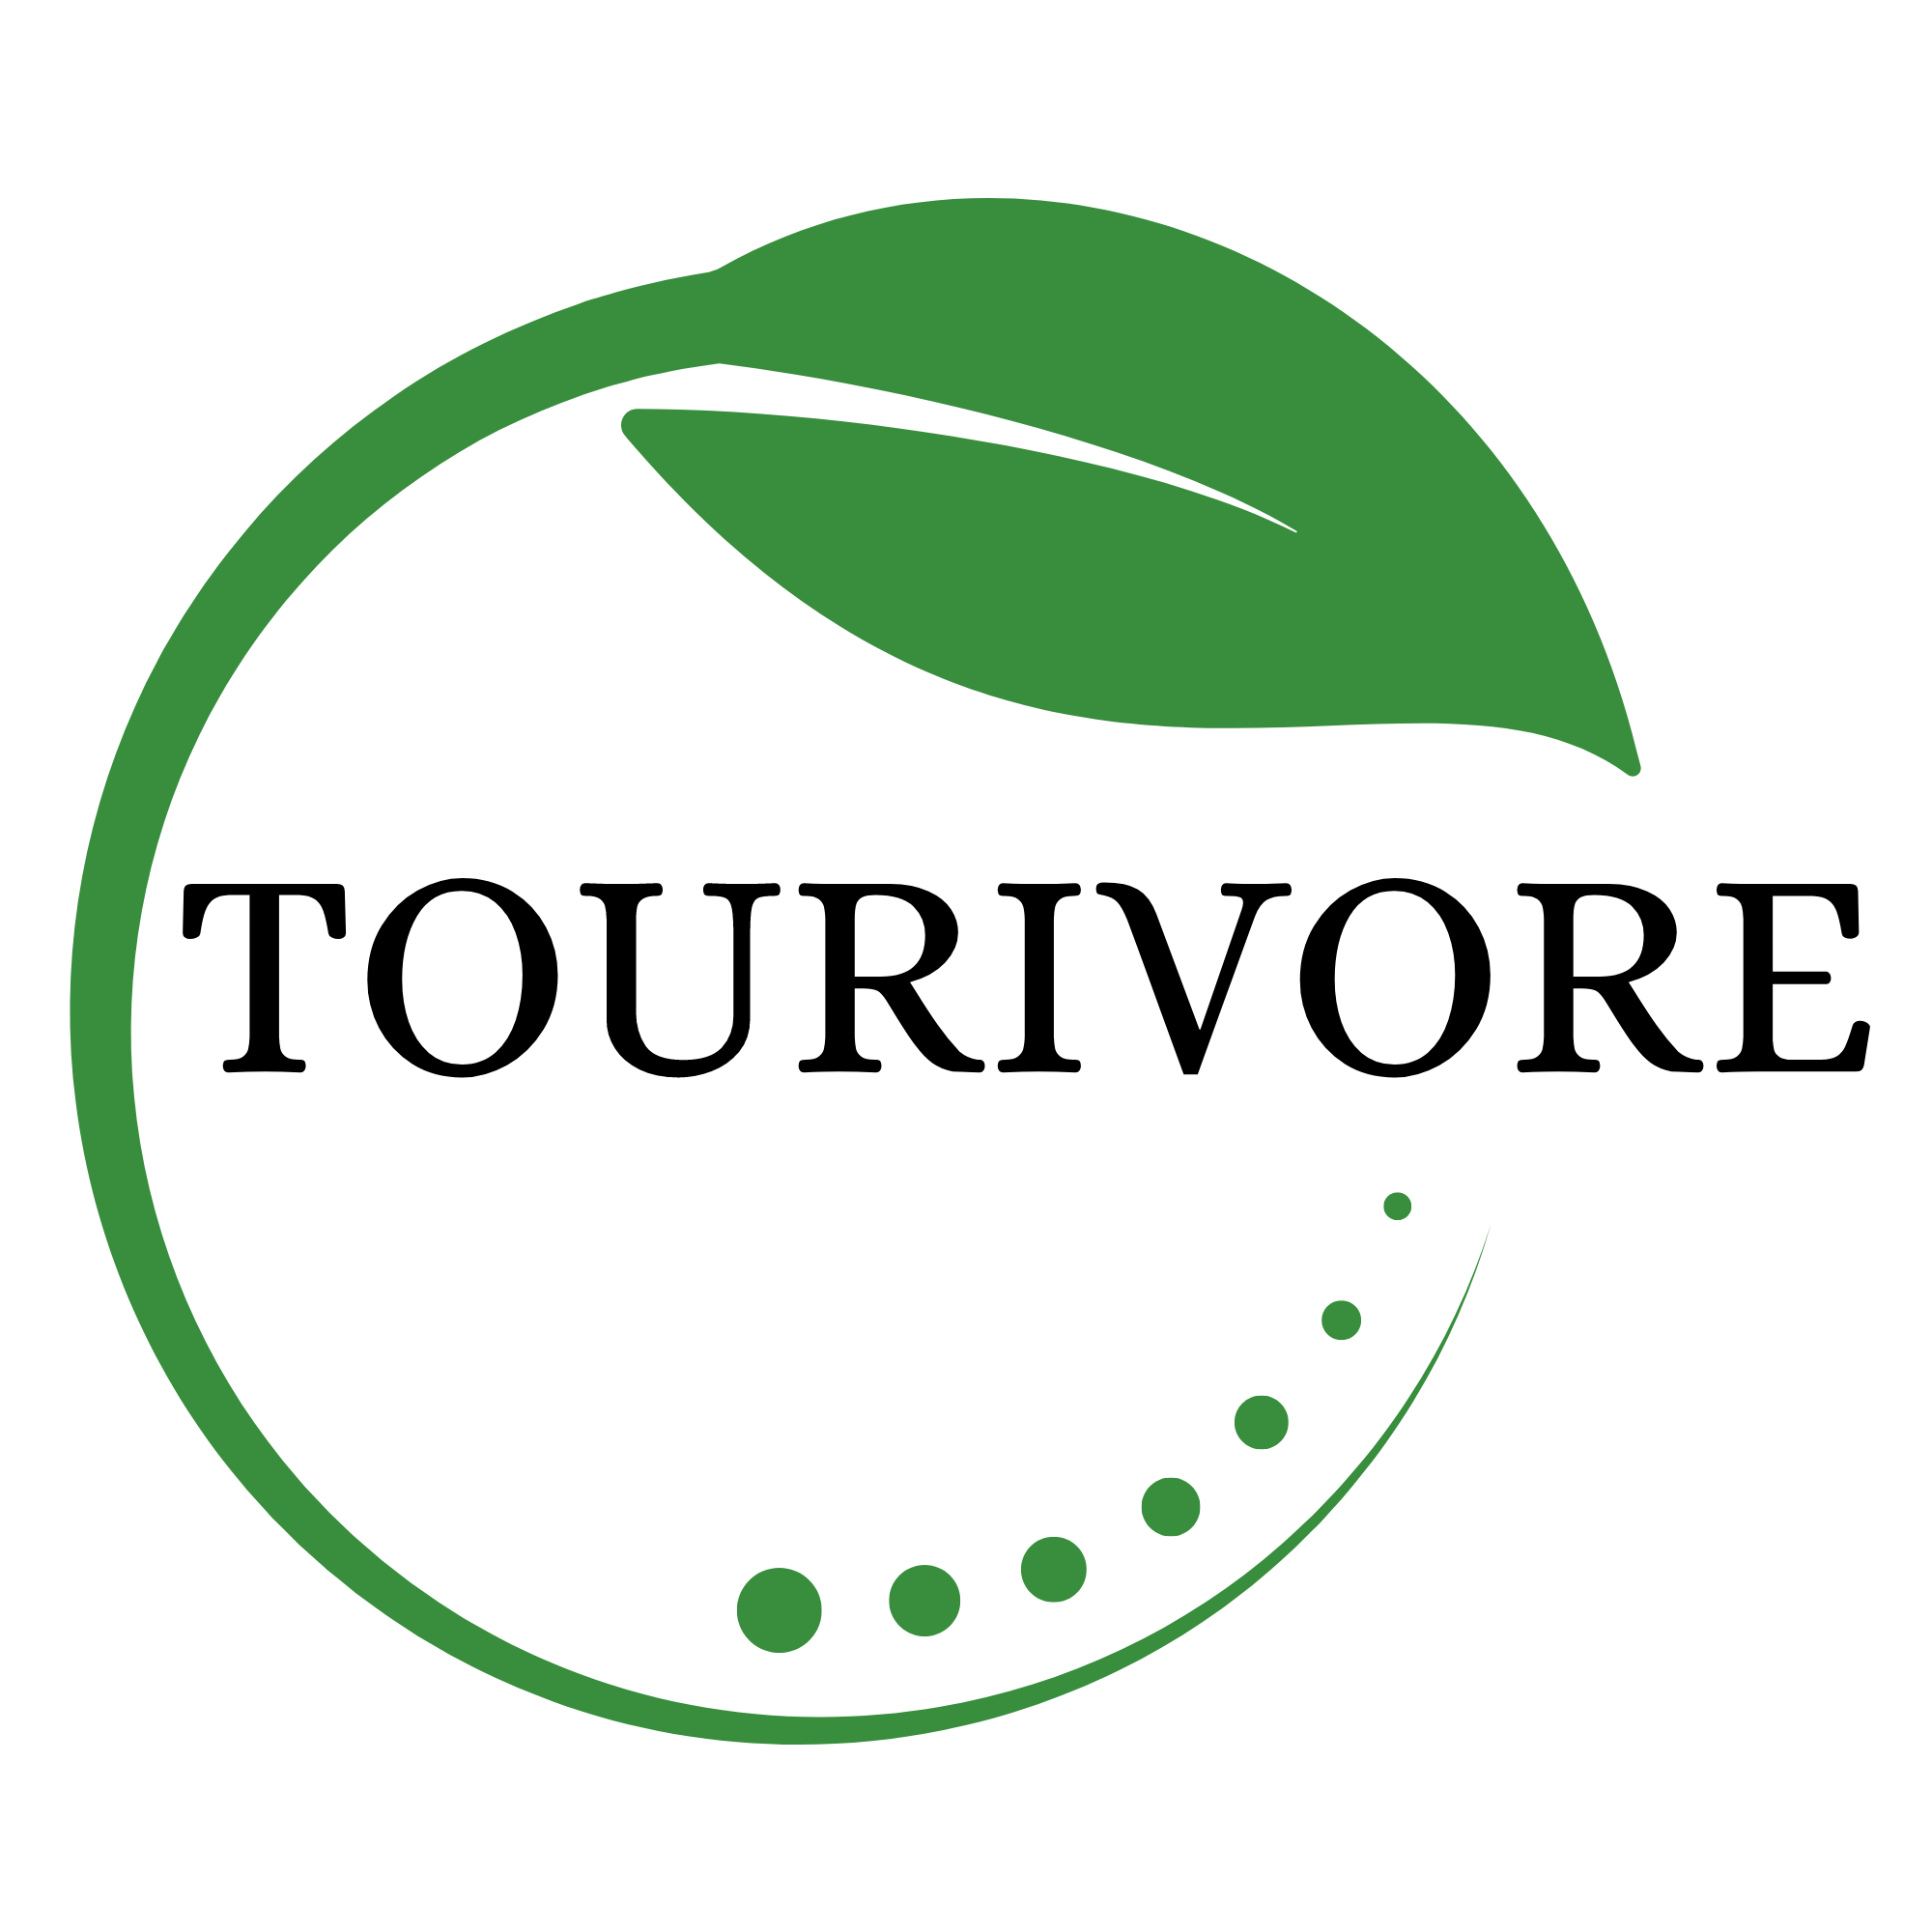 Tourivore